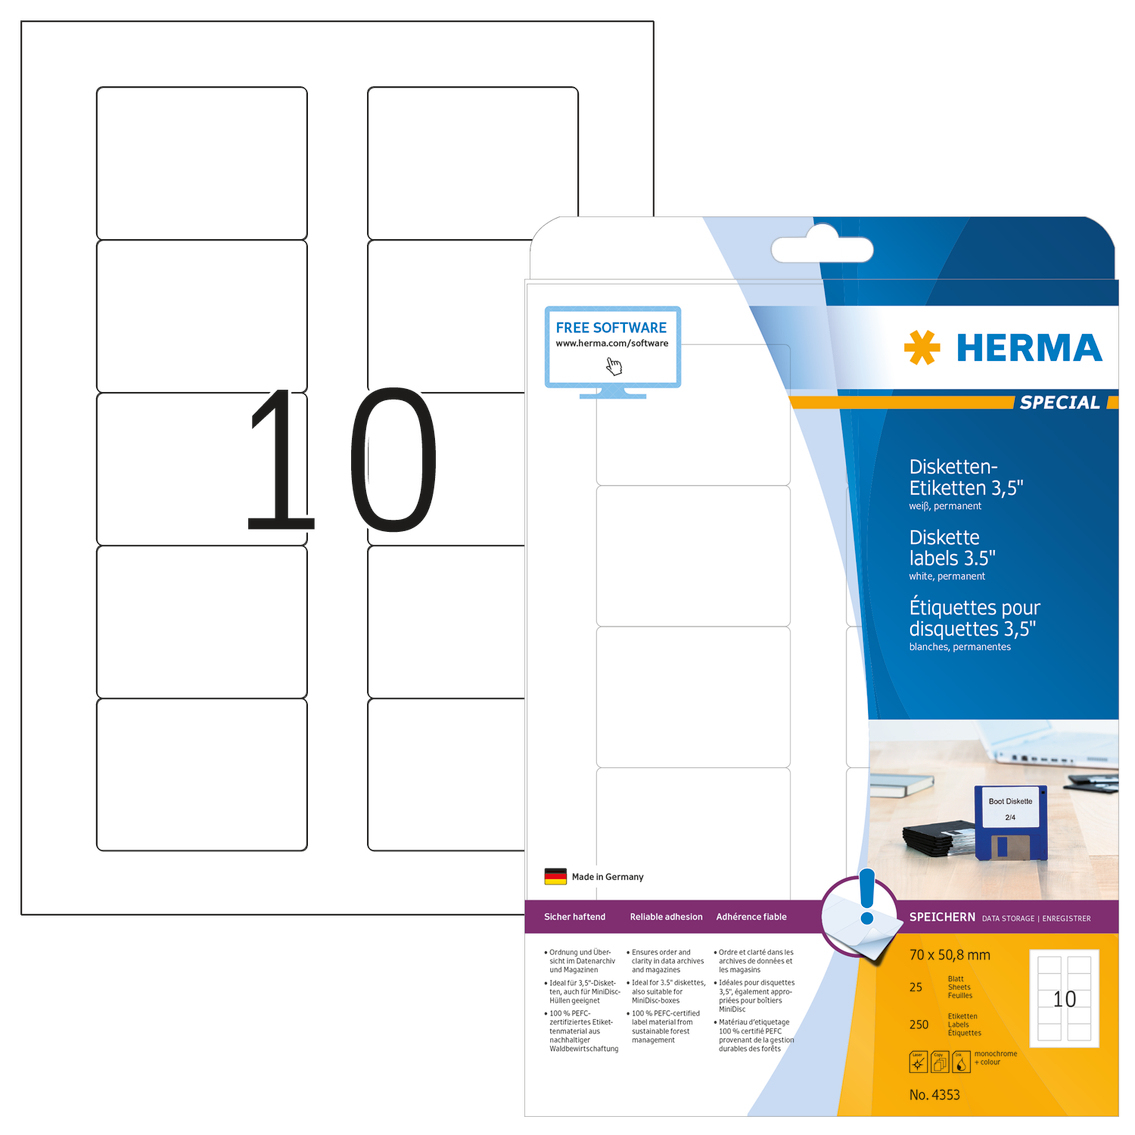 HERMA Diskette-etiketten wit 3.5 70x50.8 A4 250 st.